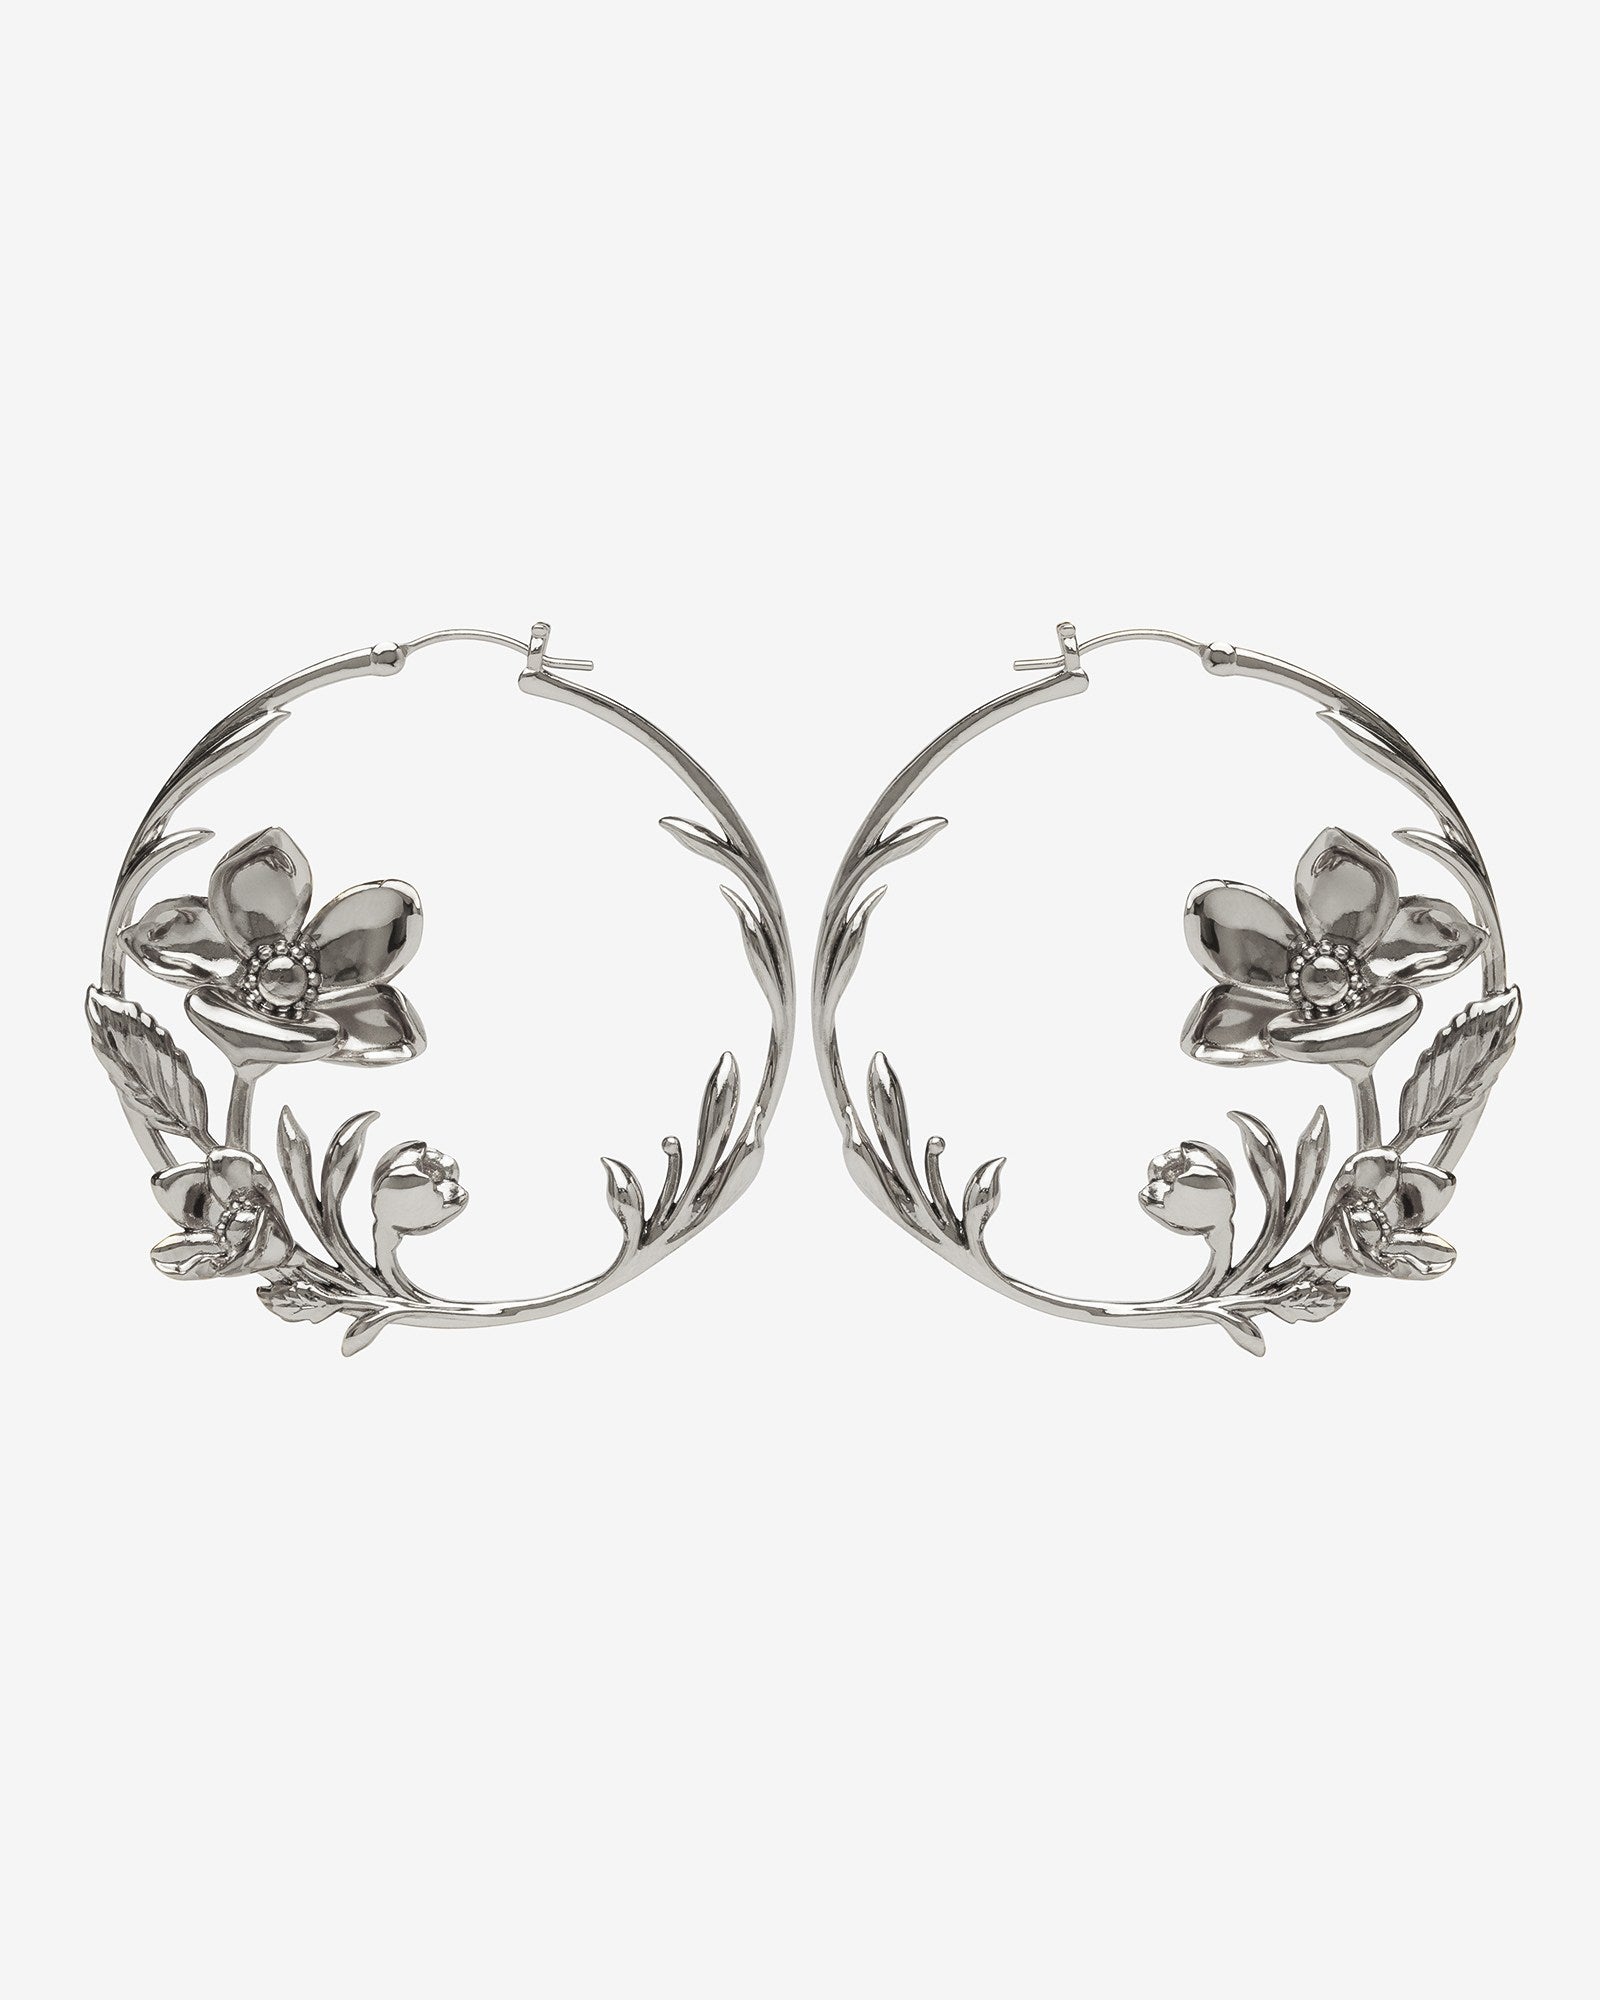 Botany Earrings by Jentonic x Ask & Embla - Earrings - Ask and Embla